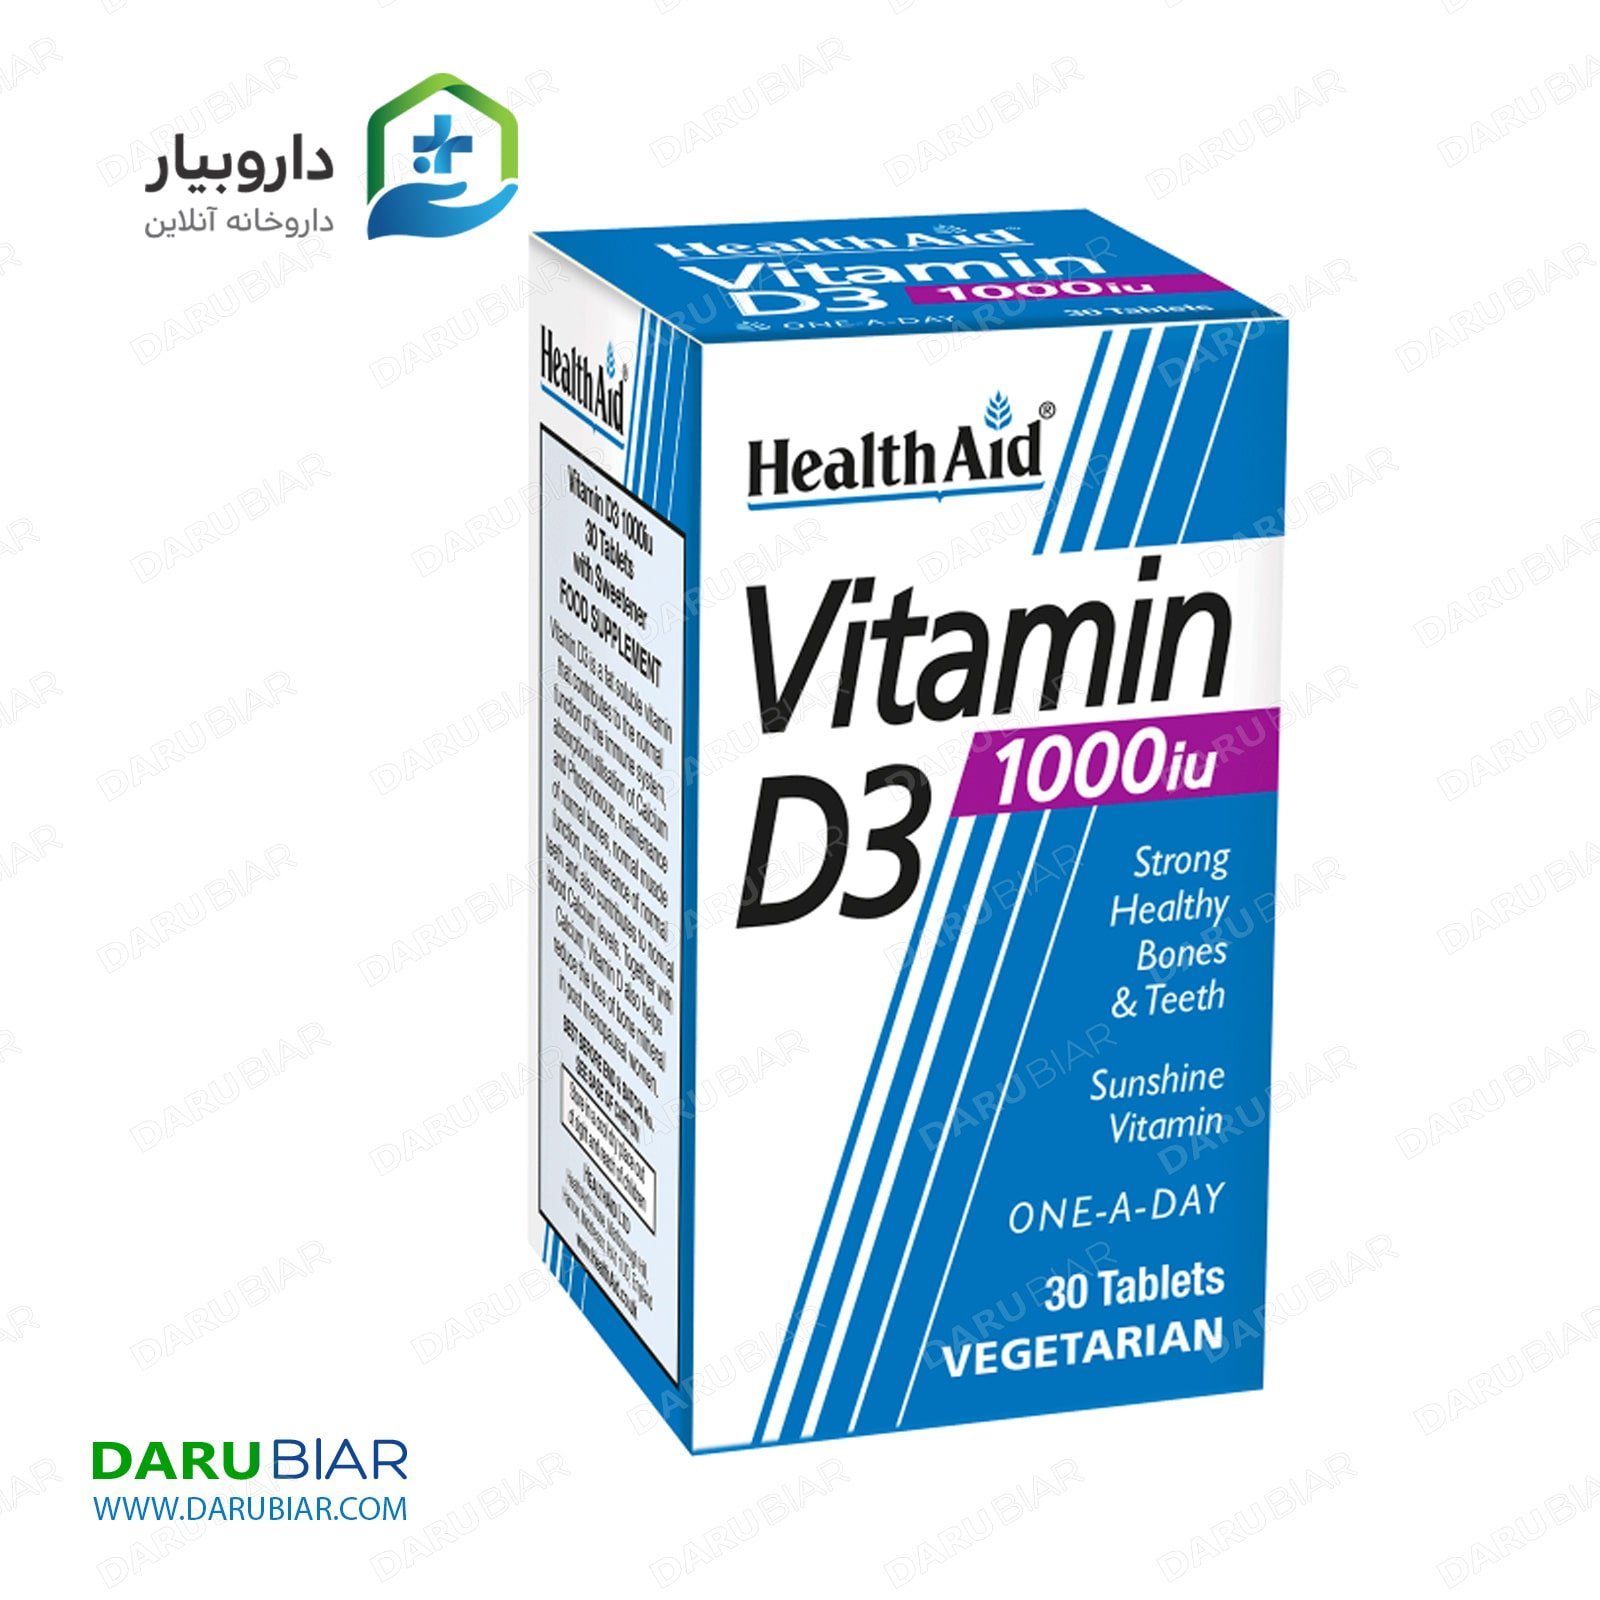 ویتامین D3 هلث اید 30 عددی HealthAid Vitamin D3 1000iu 30 Tablets